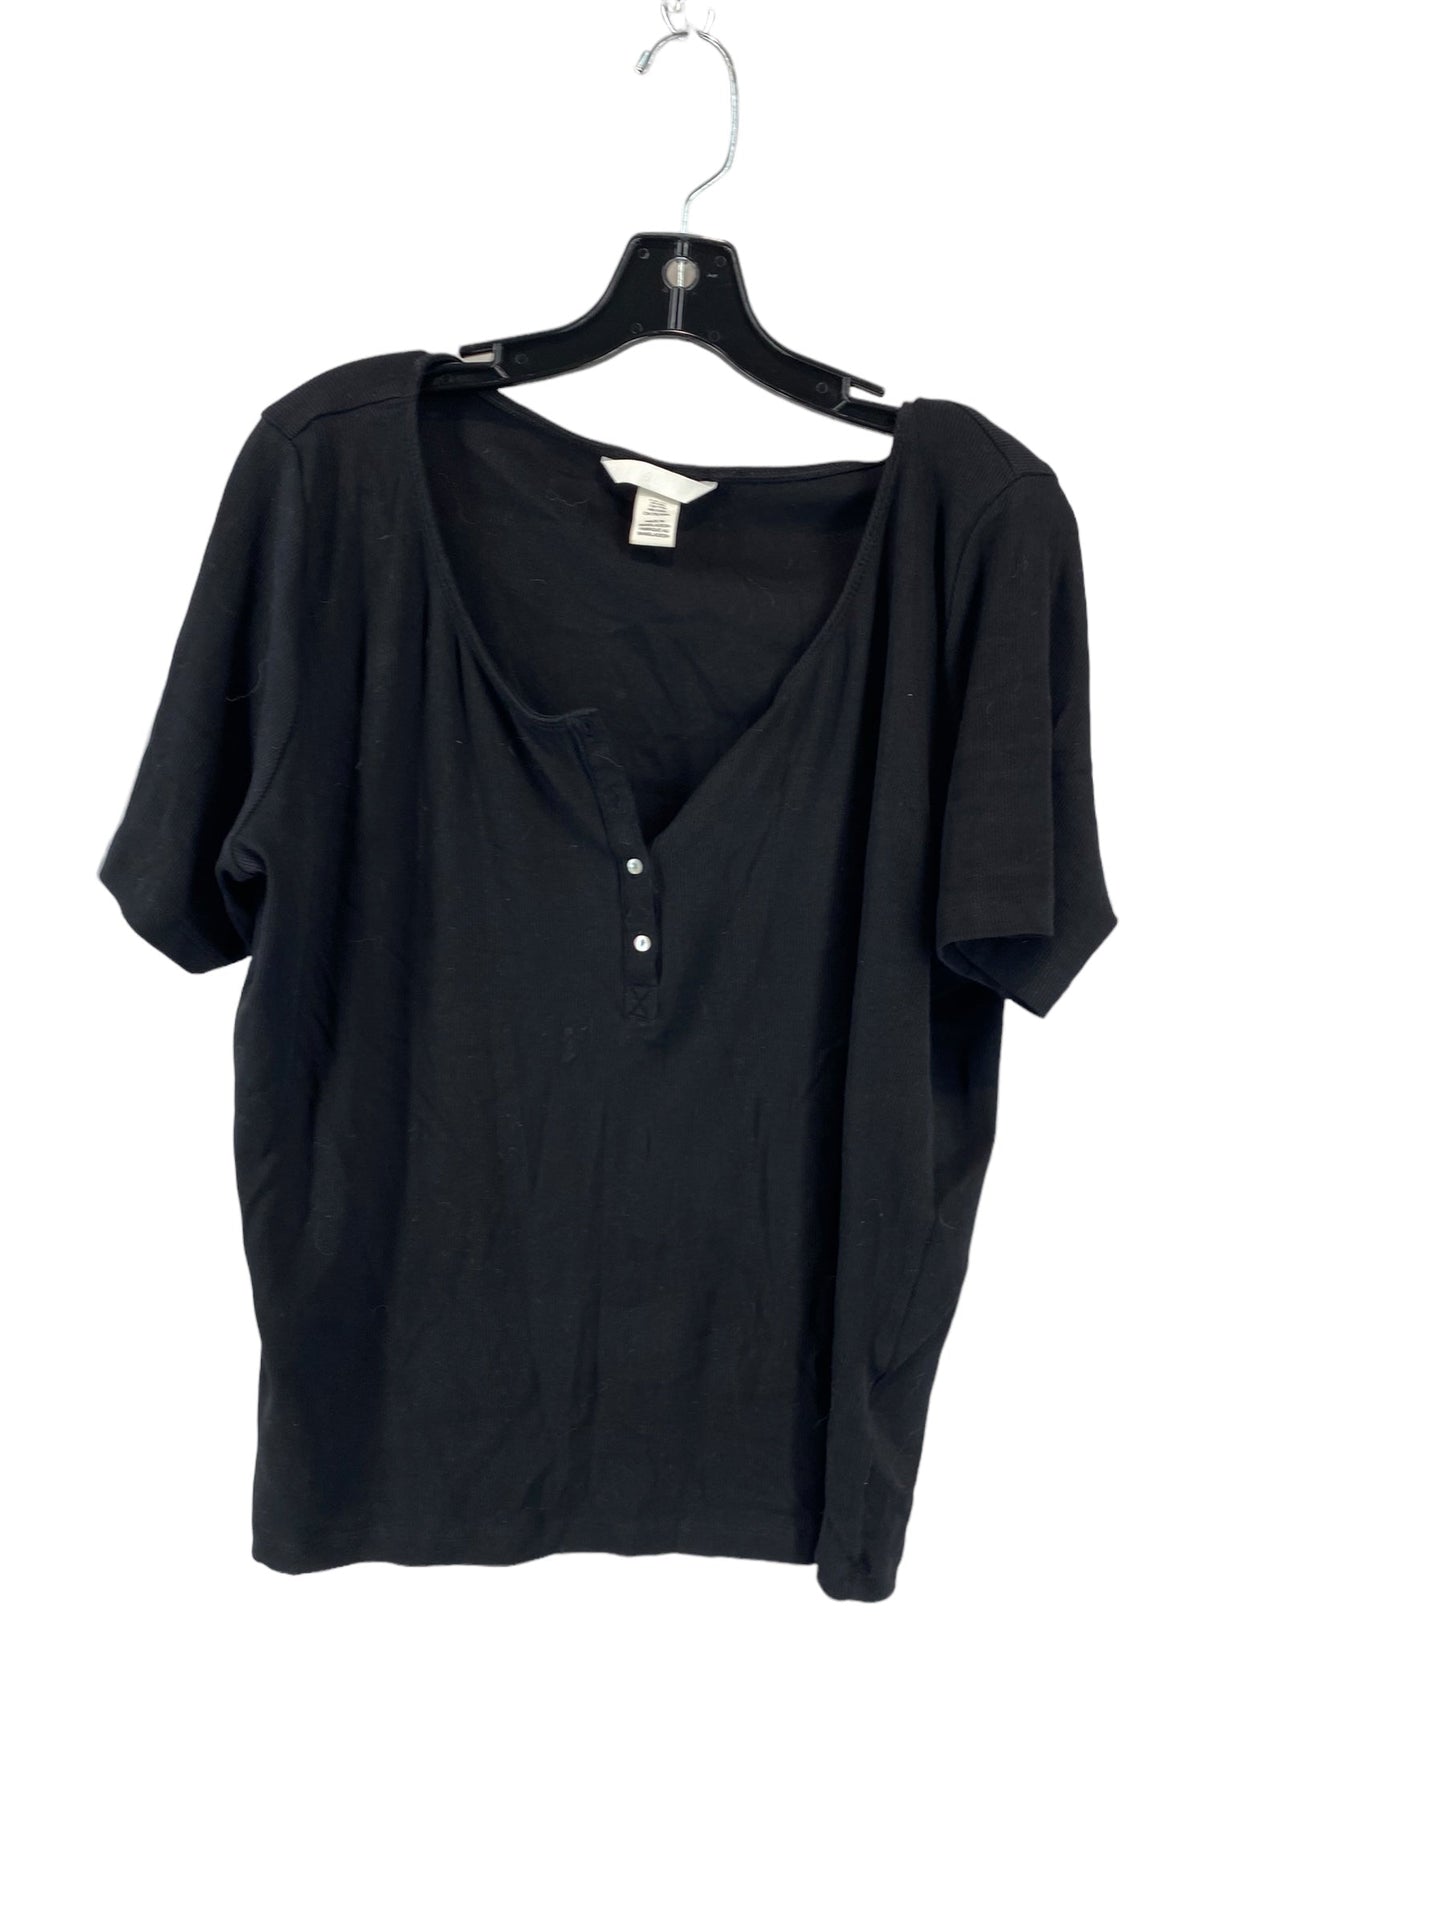 Black Top Short Sleeve H&m, Size Xxl